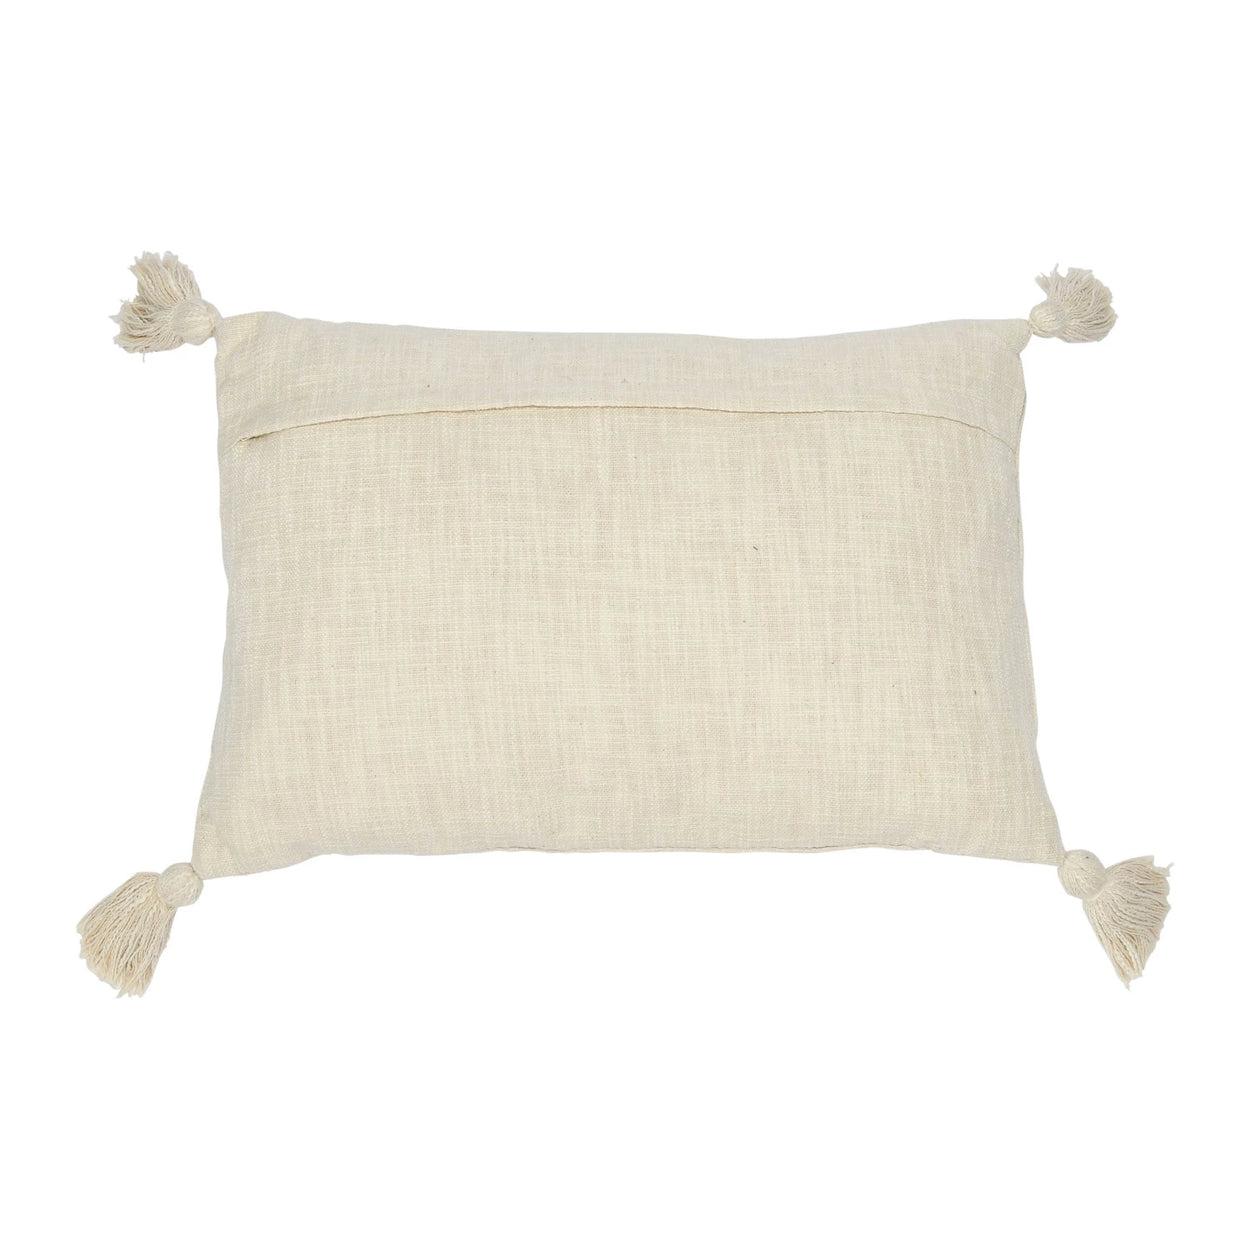 Woven Cotton Slub Lumbar Pillow With Applique, Fringe & Tassels